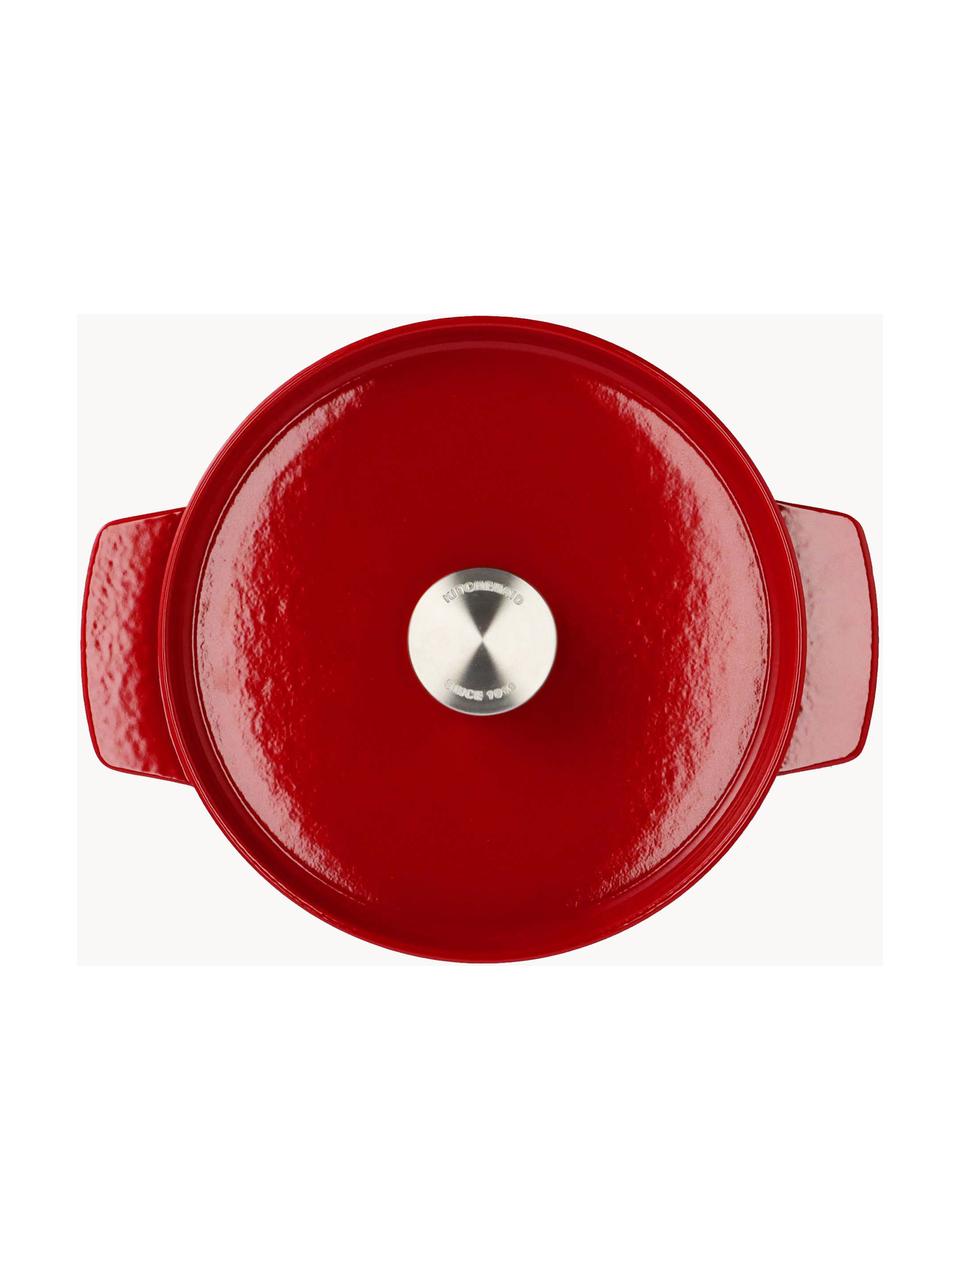 Kochtopf Doelle mit Antihaftbeschichtung, Gusseisen mit Keramik-Antihaftbeschichtung, Rot, Ø 22 x H 15 cm